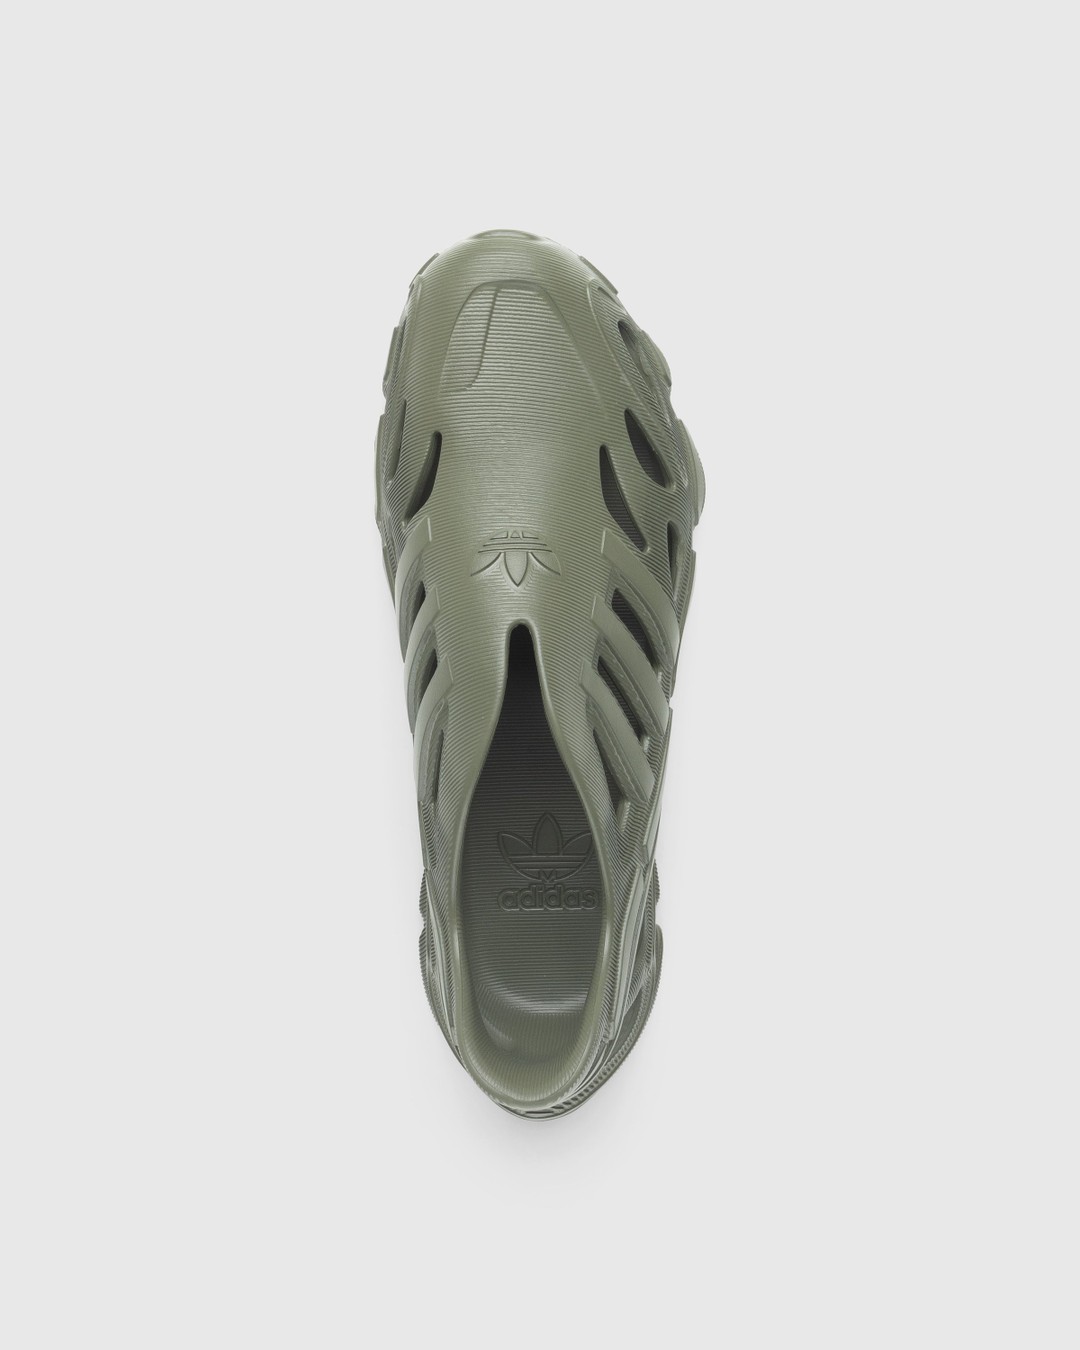 Adidas – Adifom Supernova Focus Olive - Sneakers - Green - Image 5